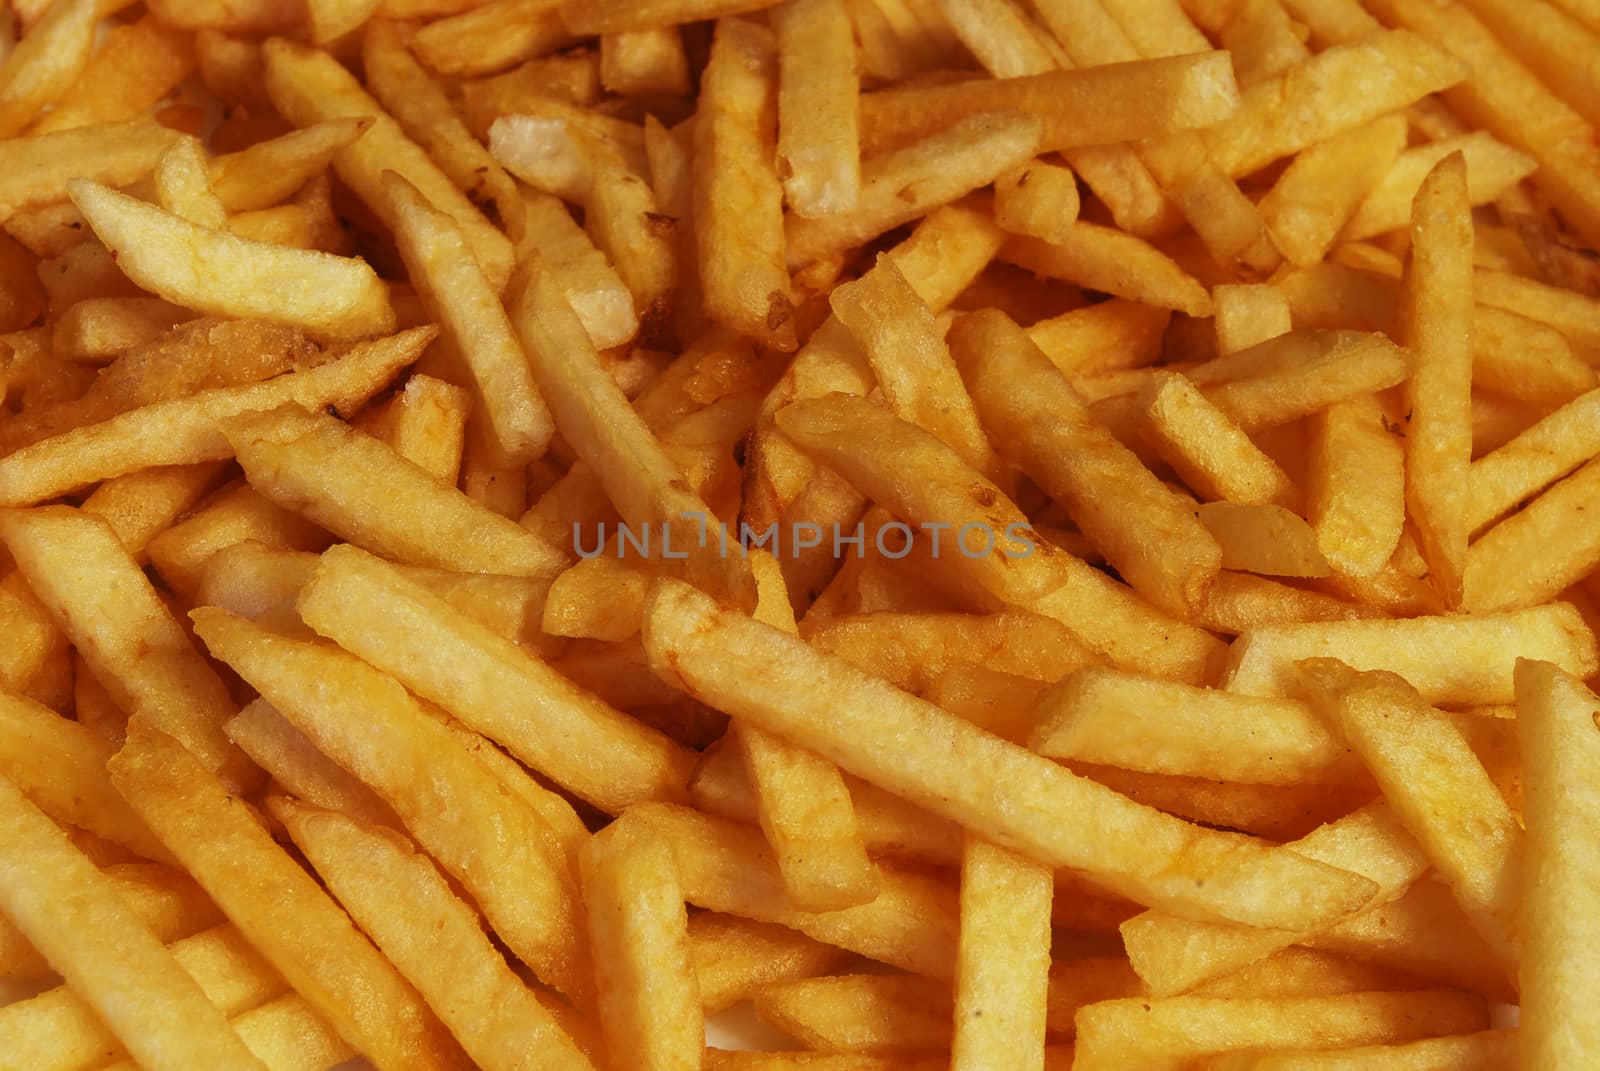 Fried Potato Closeup by Ale059